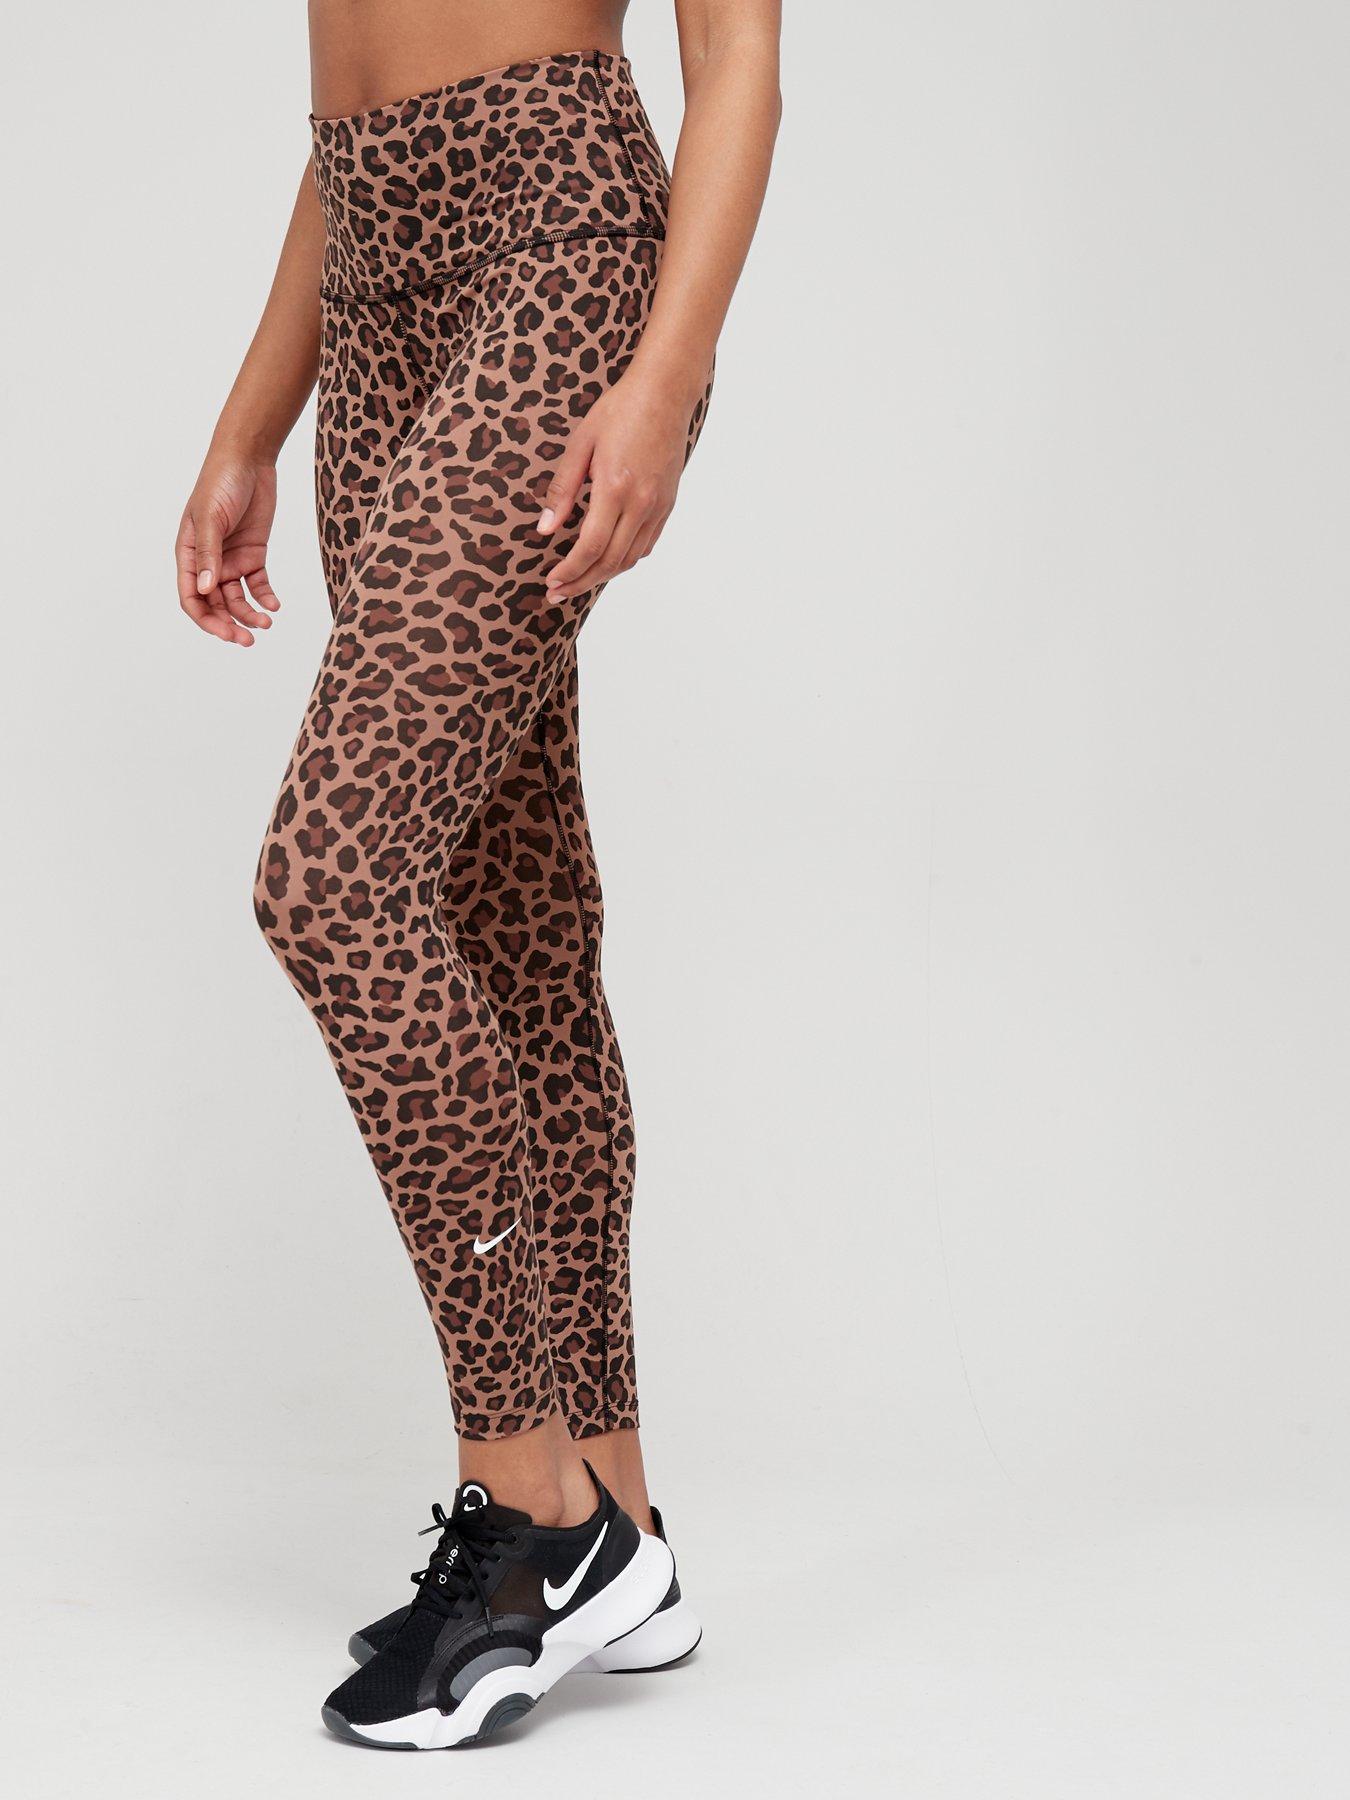 Balance Collection Leopard Print Multi Color Silver Active Pants Size M -  75% off